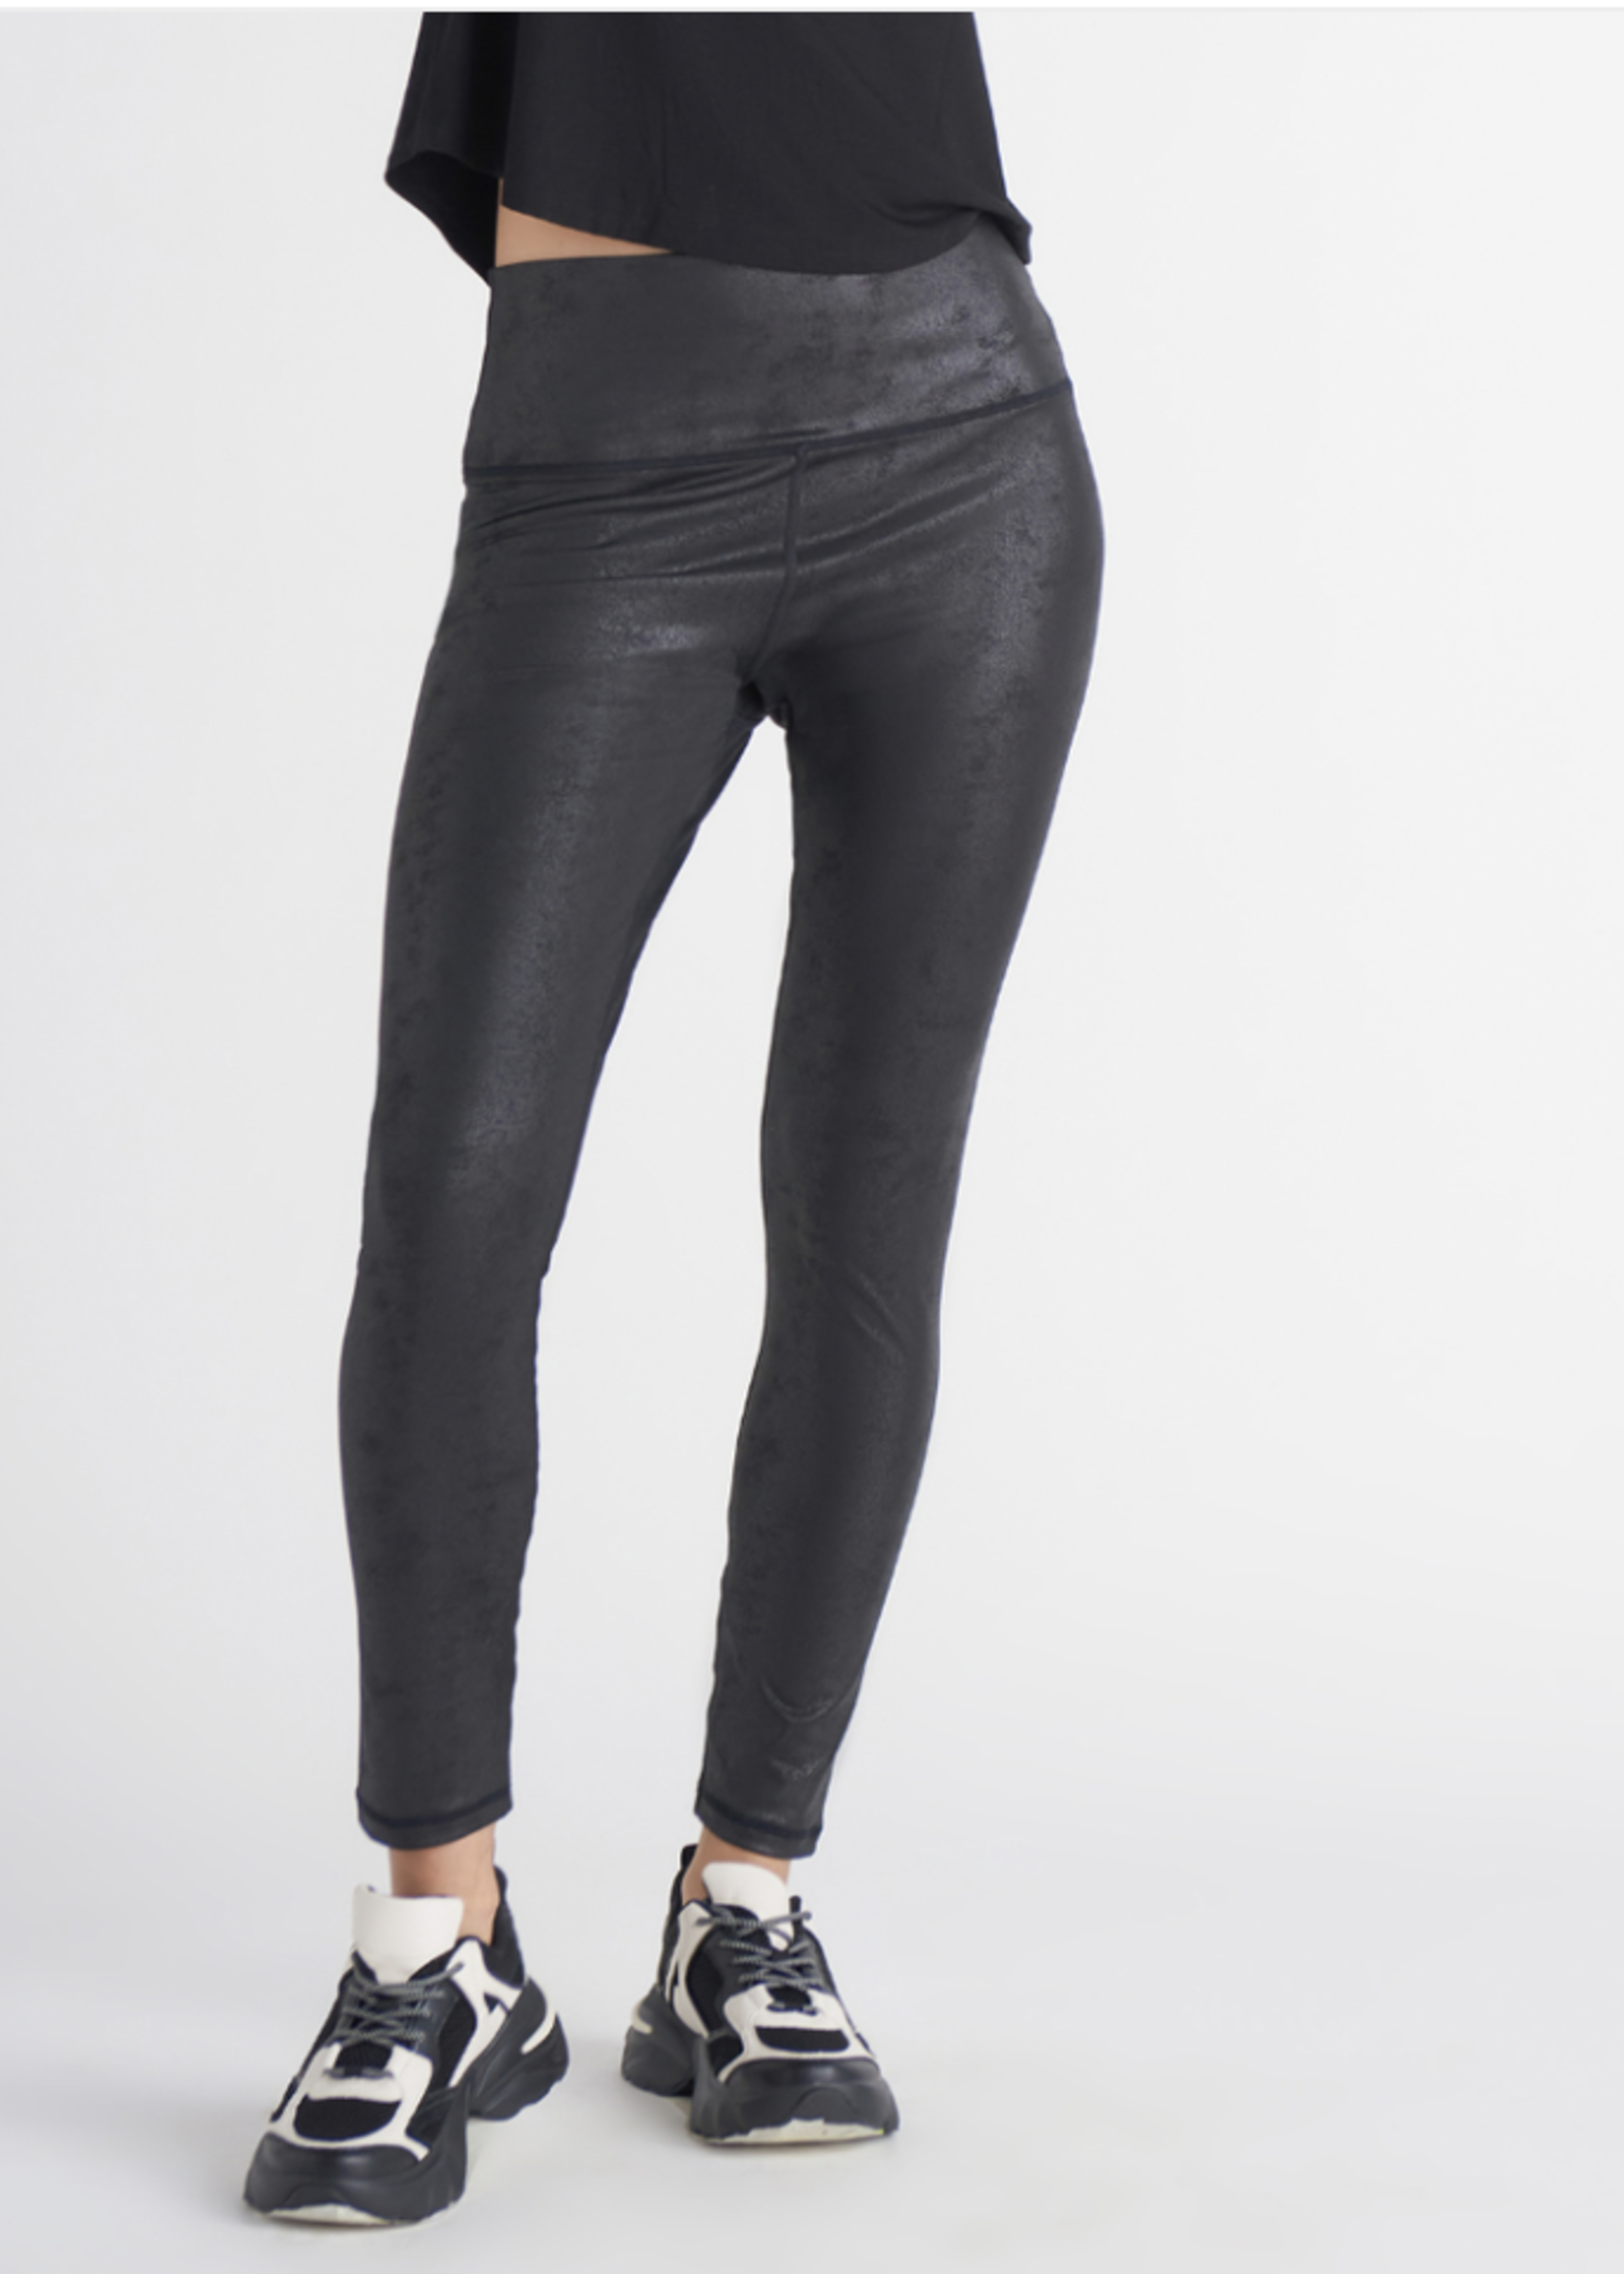 Metallic Black Faux Leather One-Leg Leggings Pants– Peridot Clothing